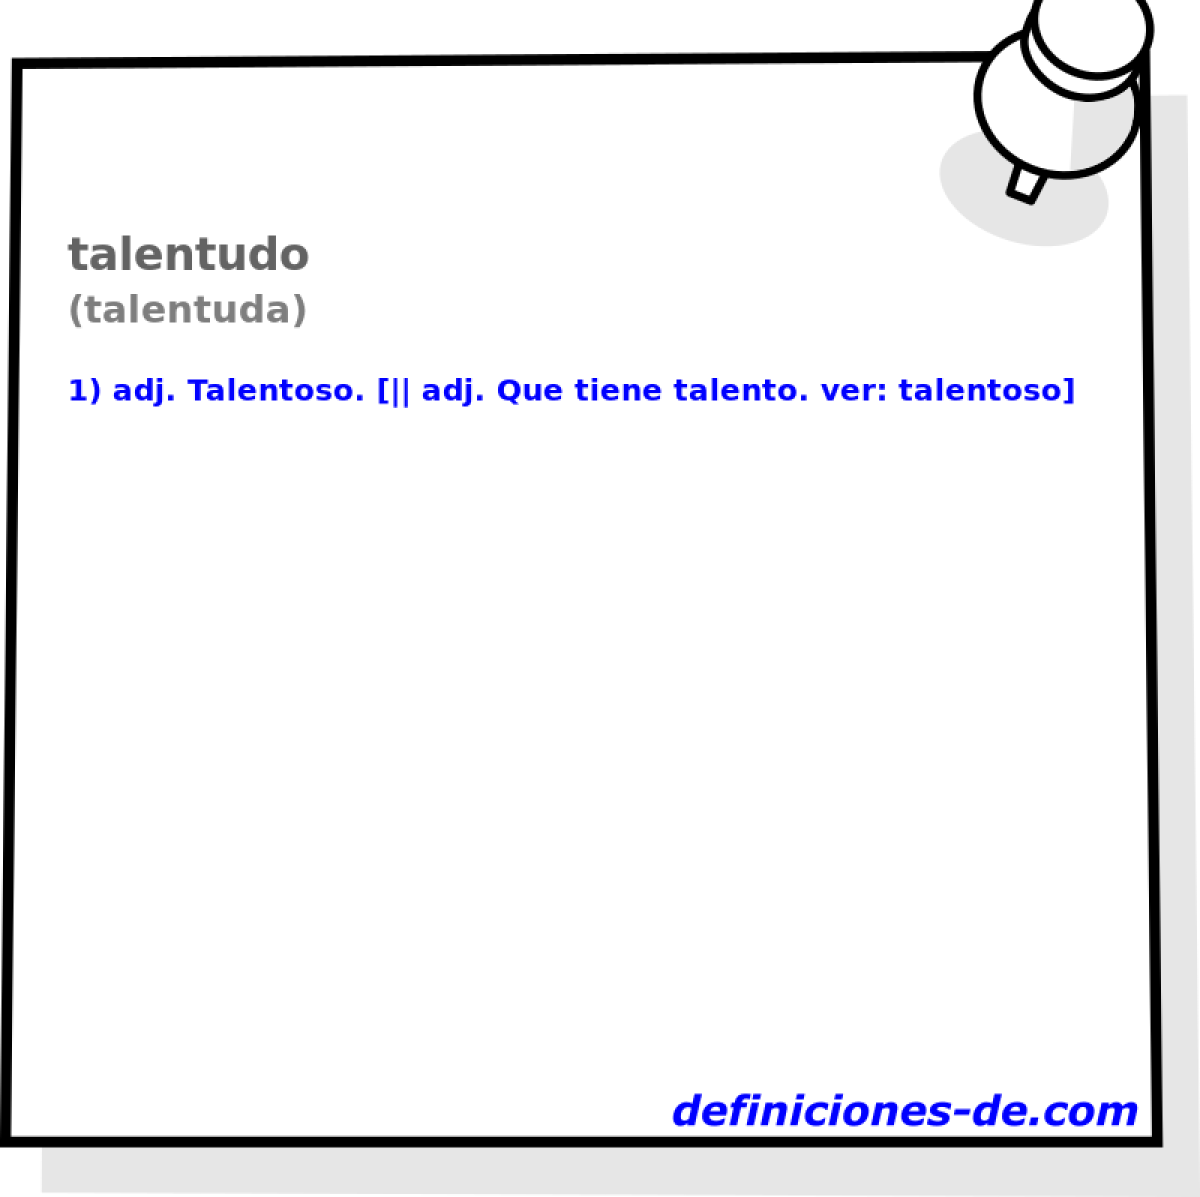 talentudo (talentuda)